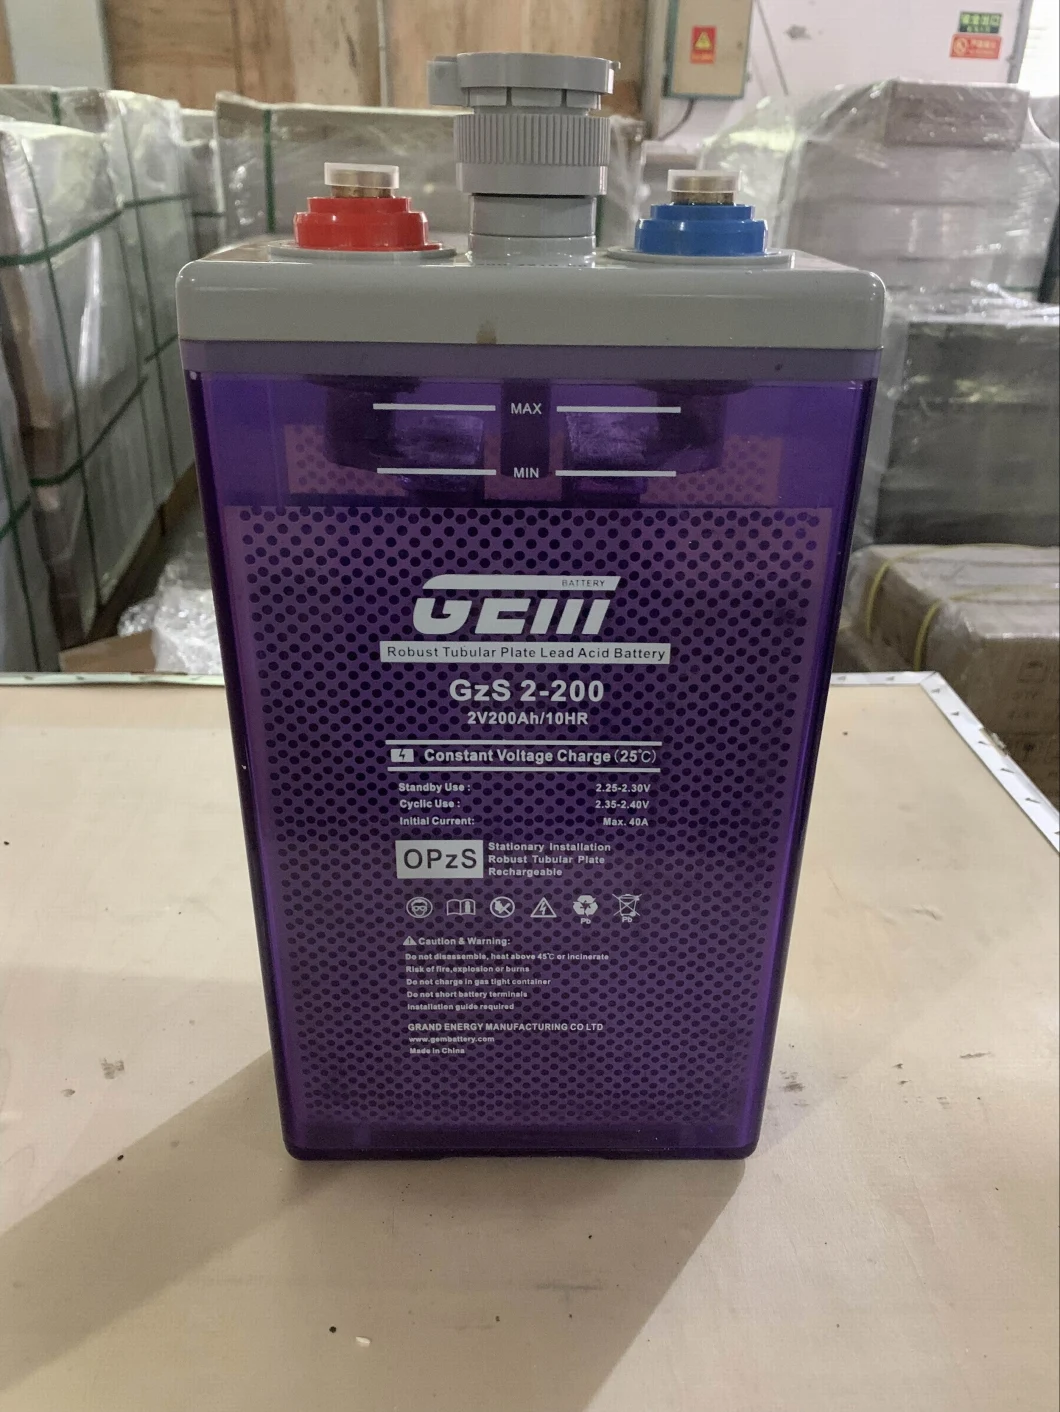 GEM Battery I GzS Series High quality batteries OPzS 2V-1000AH